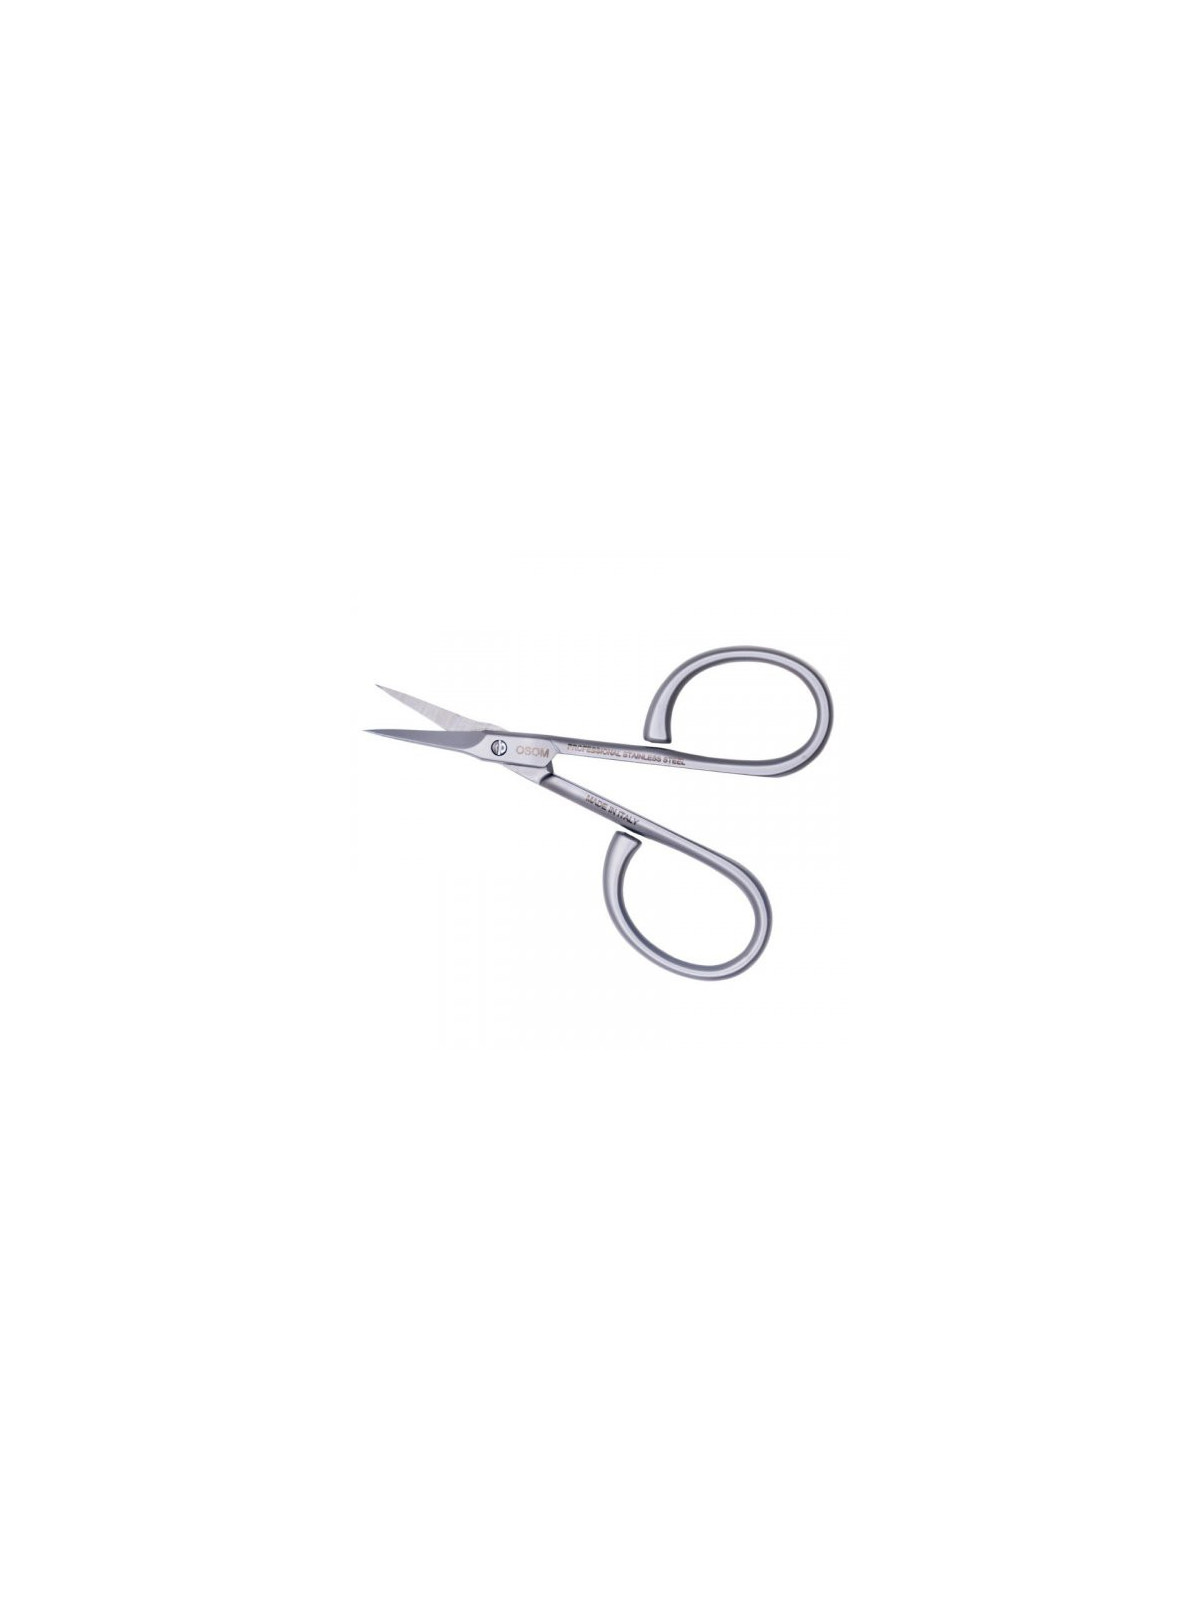 OSOM Professional Žirklutės odelėms Cuticle Scissors